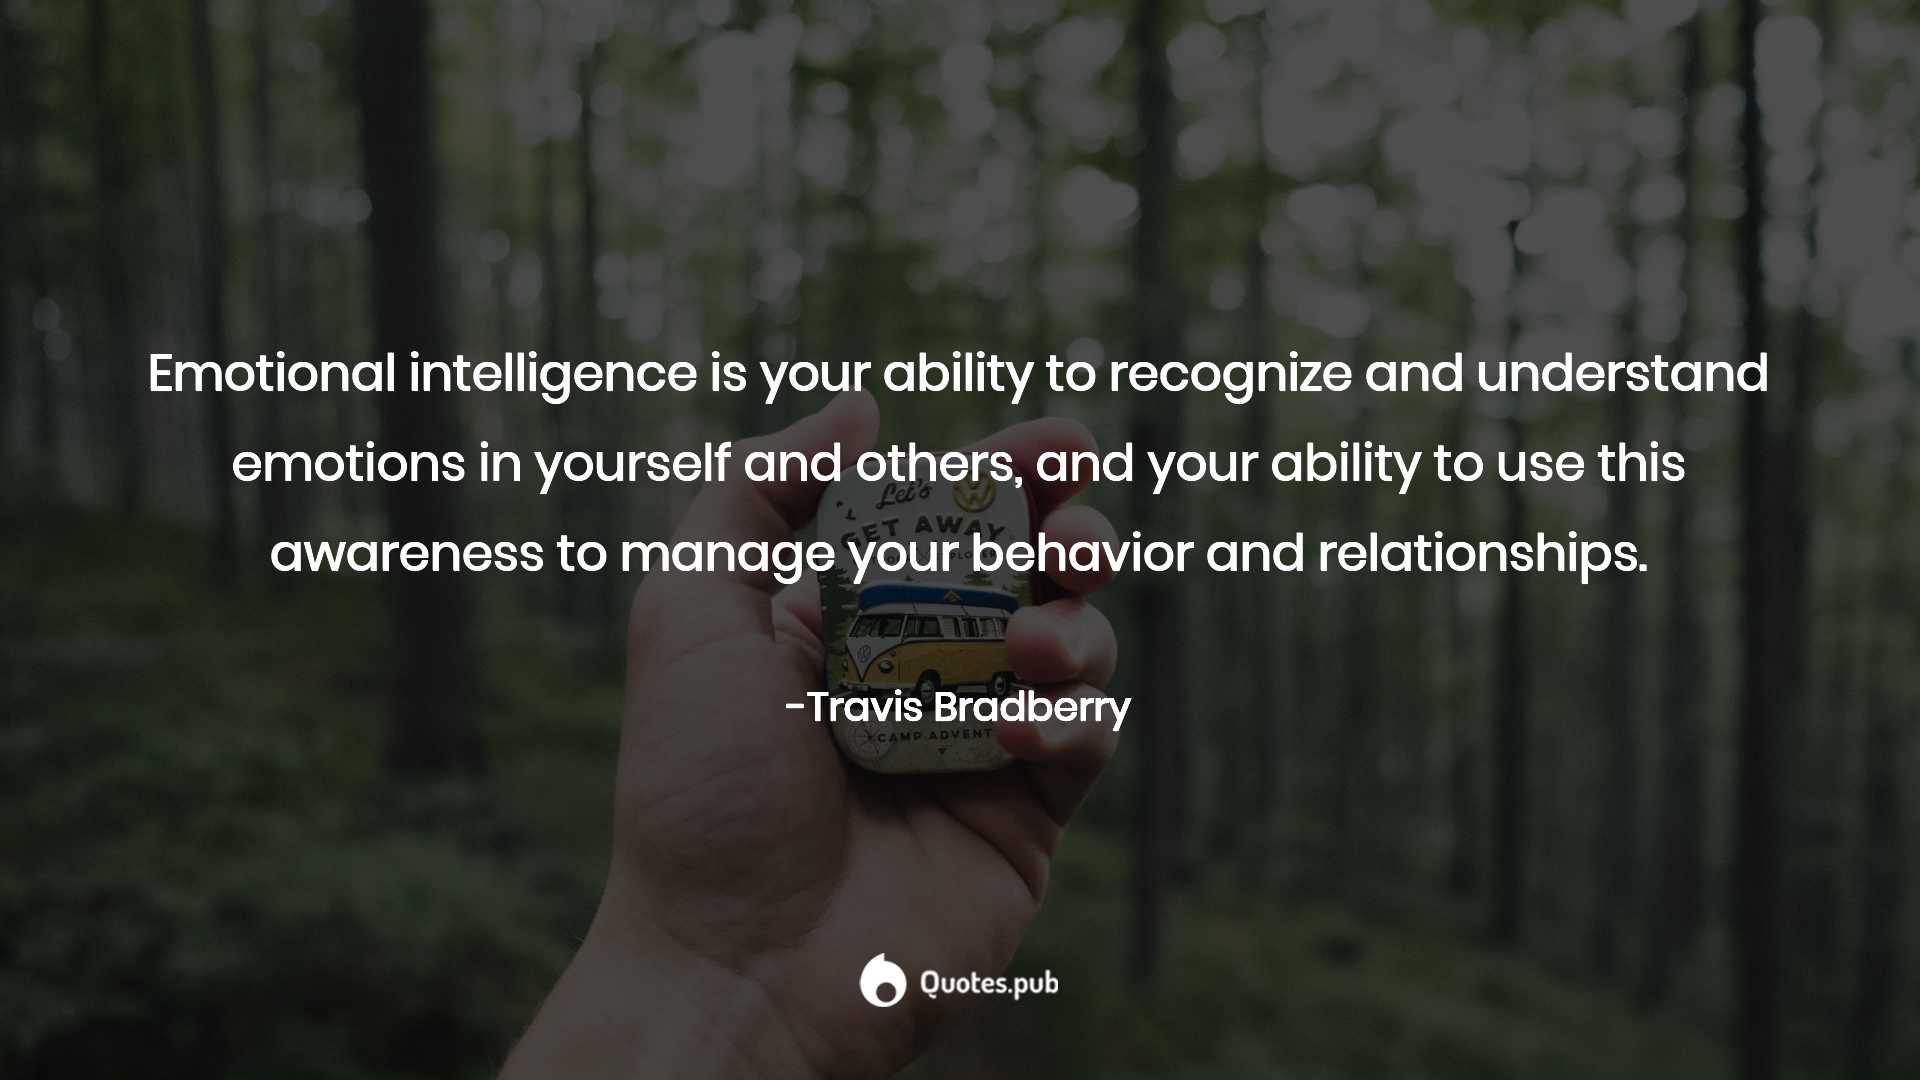 Travis Bradberry Quotes on Emotional Intelligence 2.0